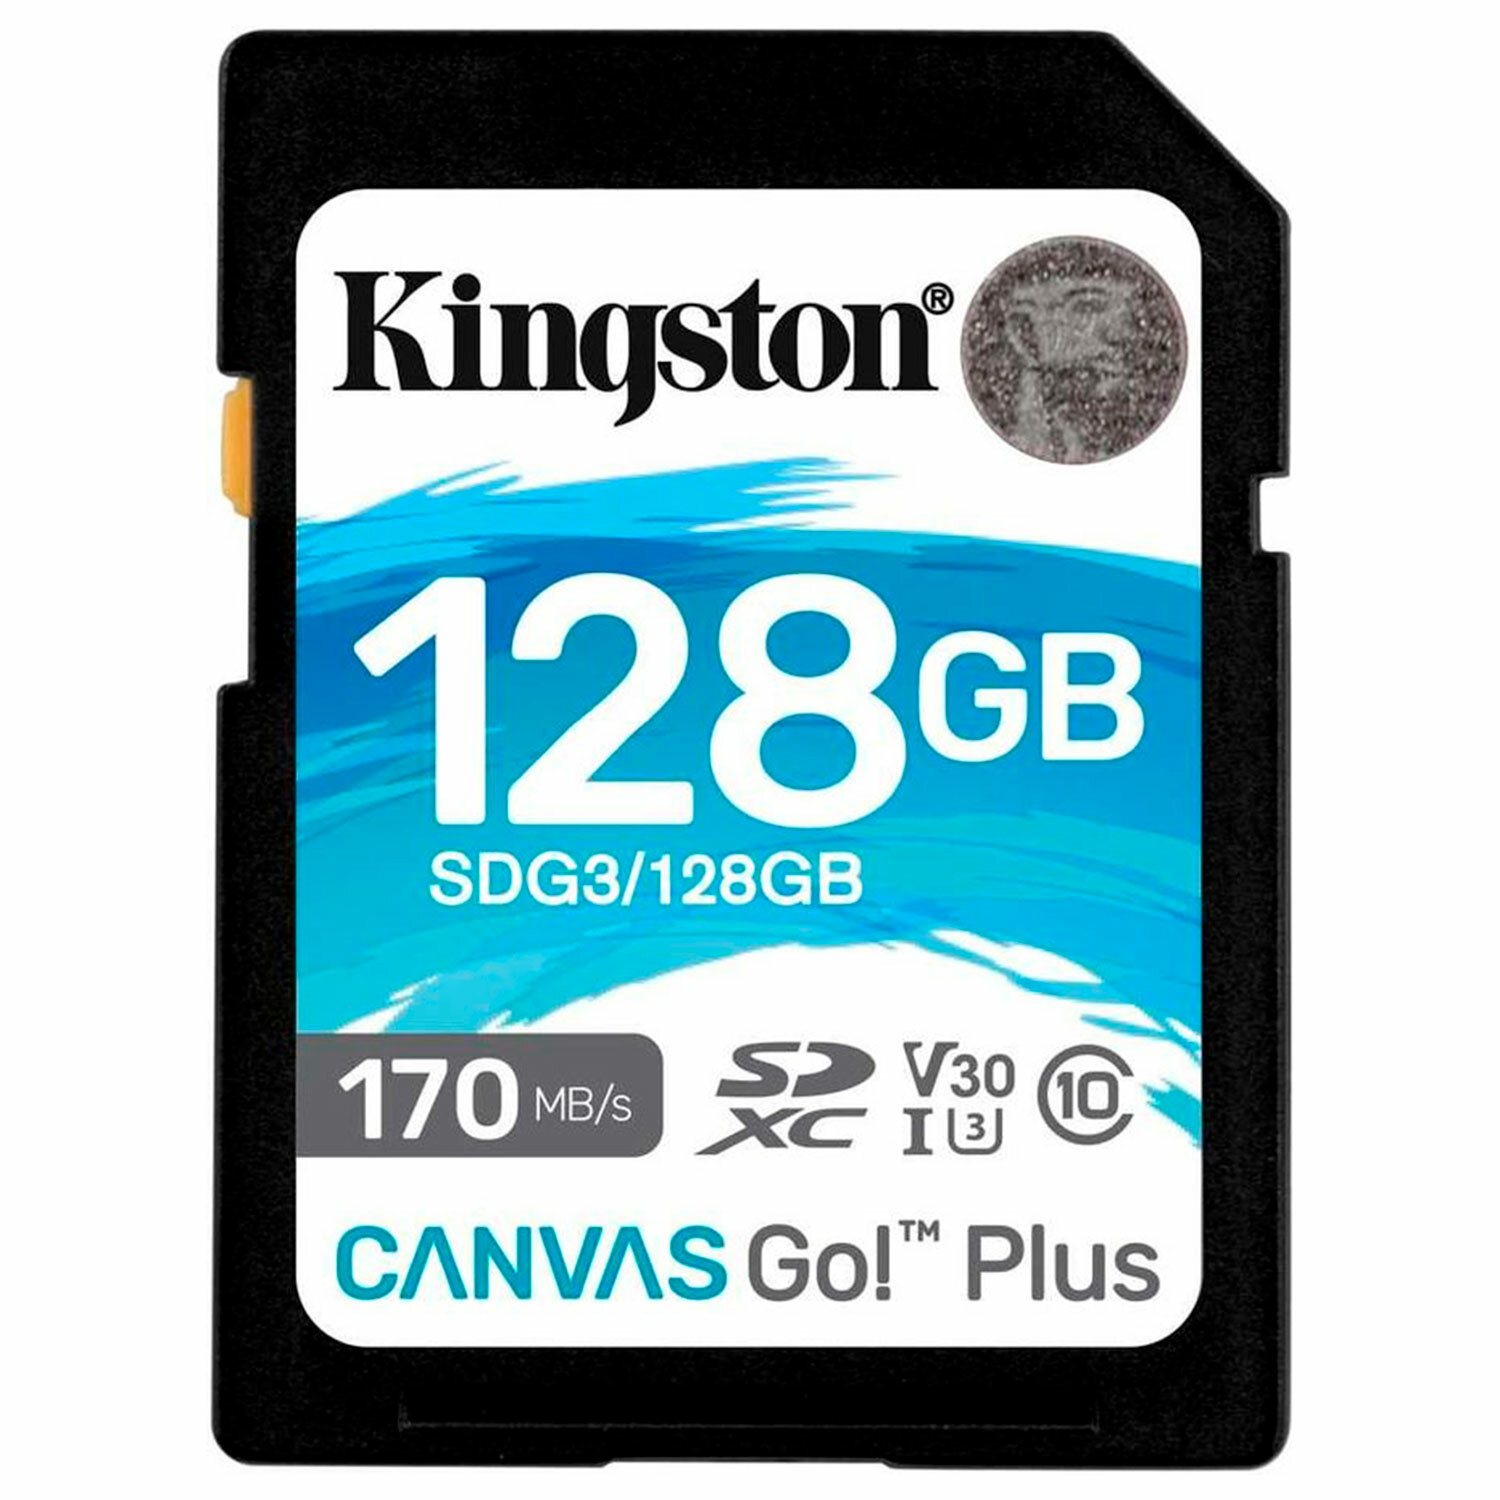 Kingston  KINGSTON SDG3/128GB